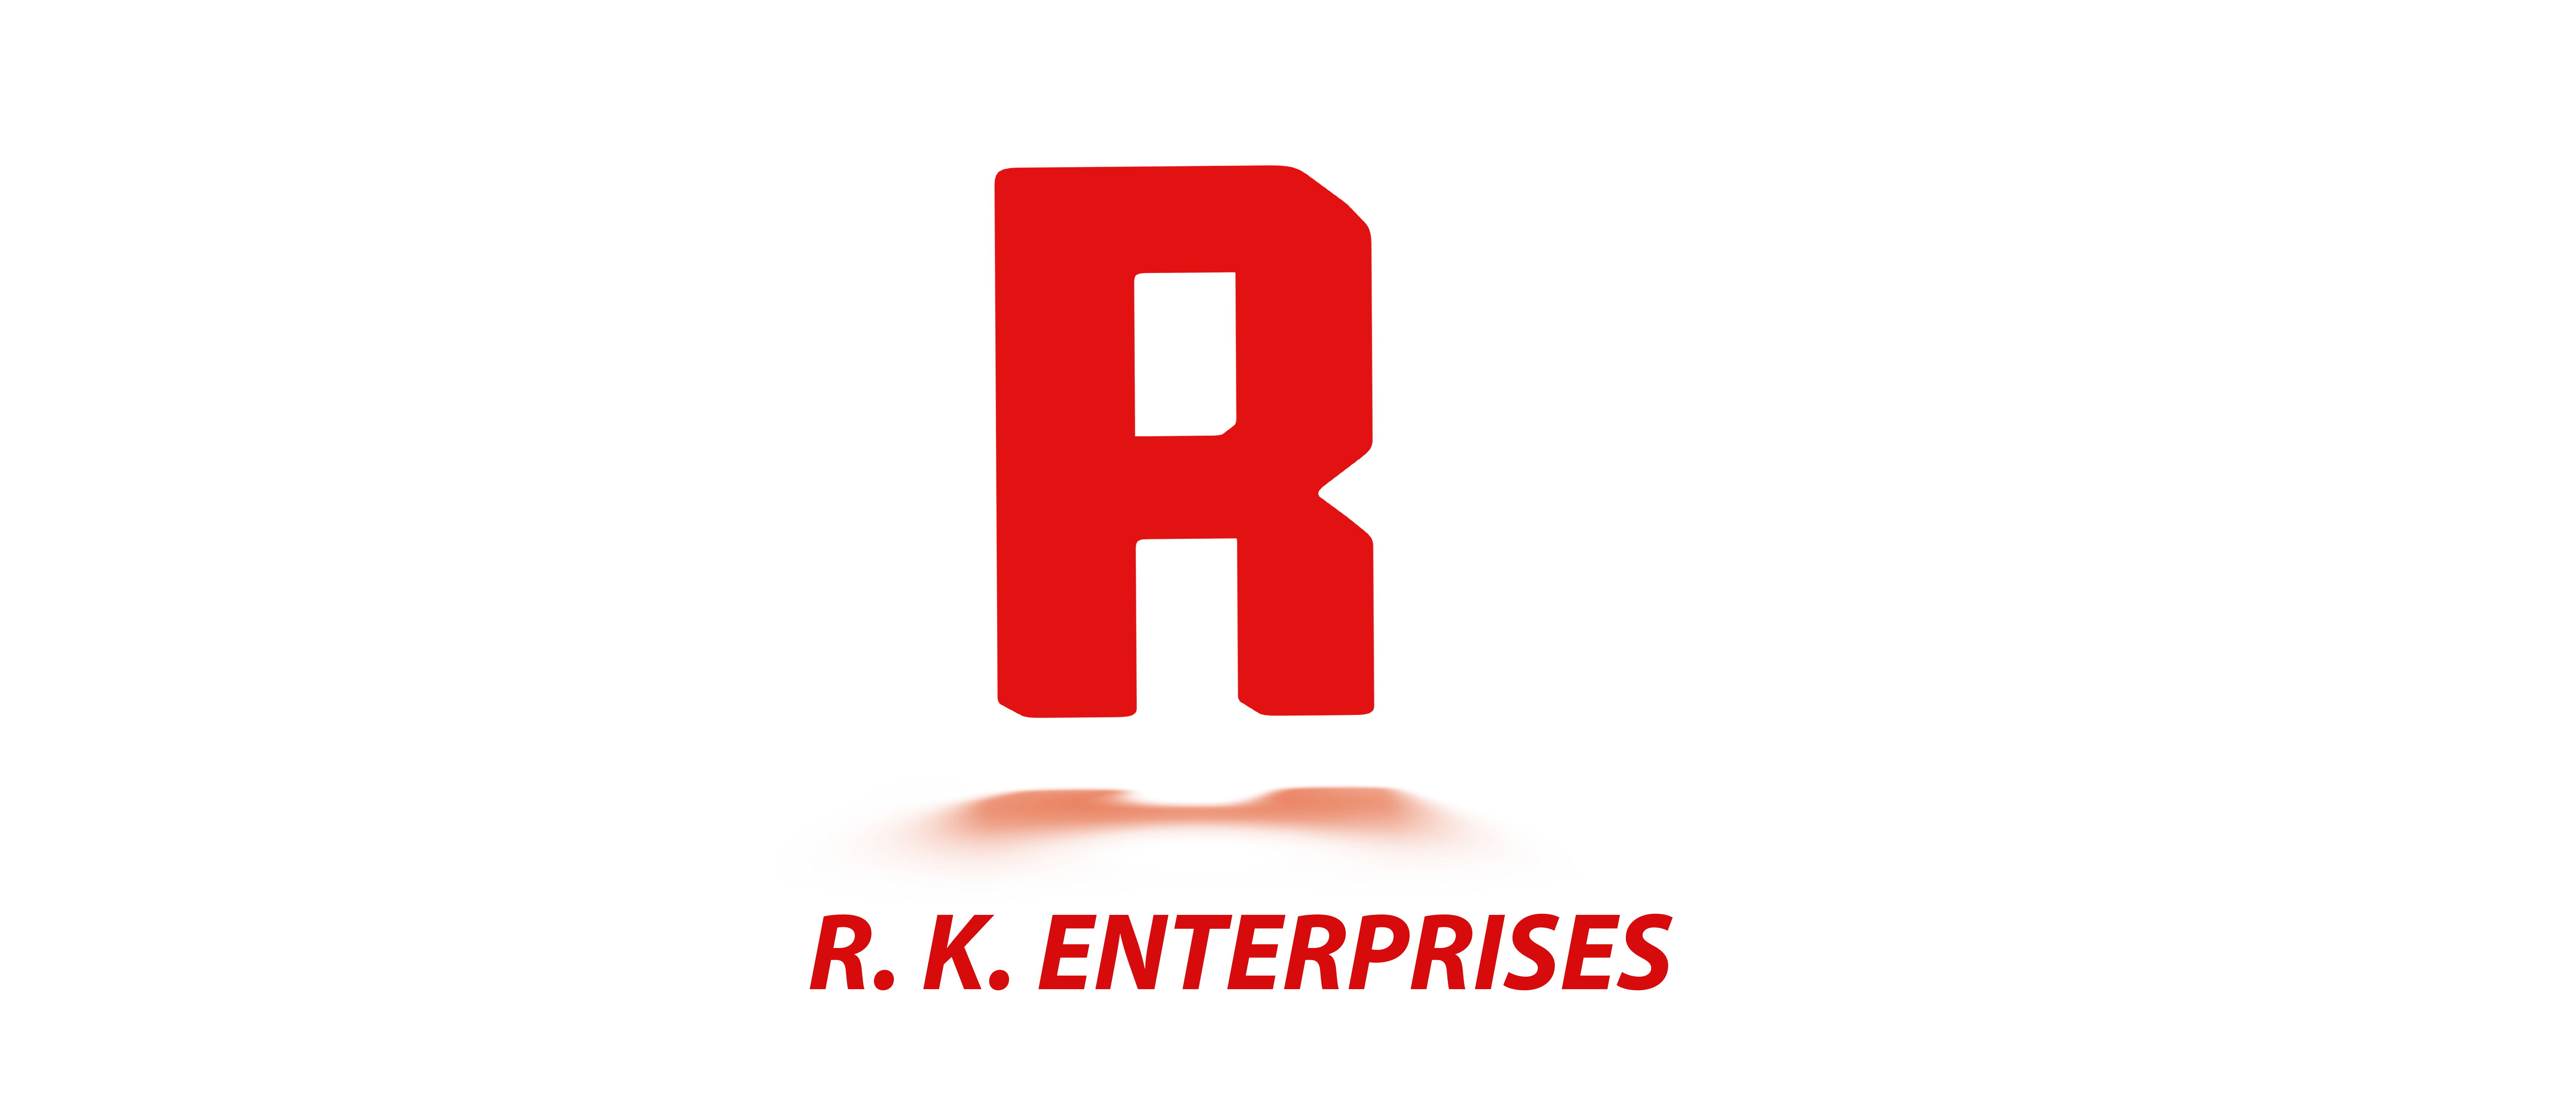 R.K. ENTERPRISES